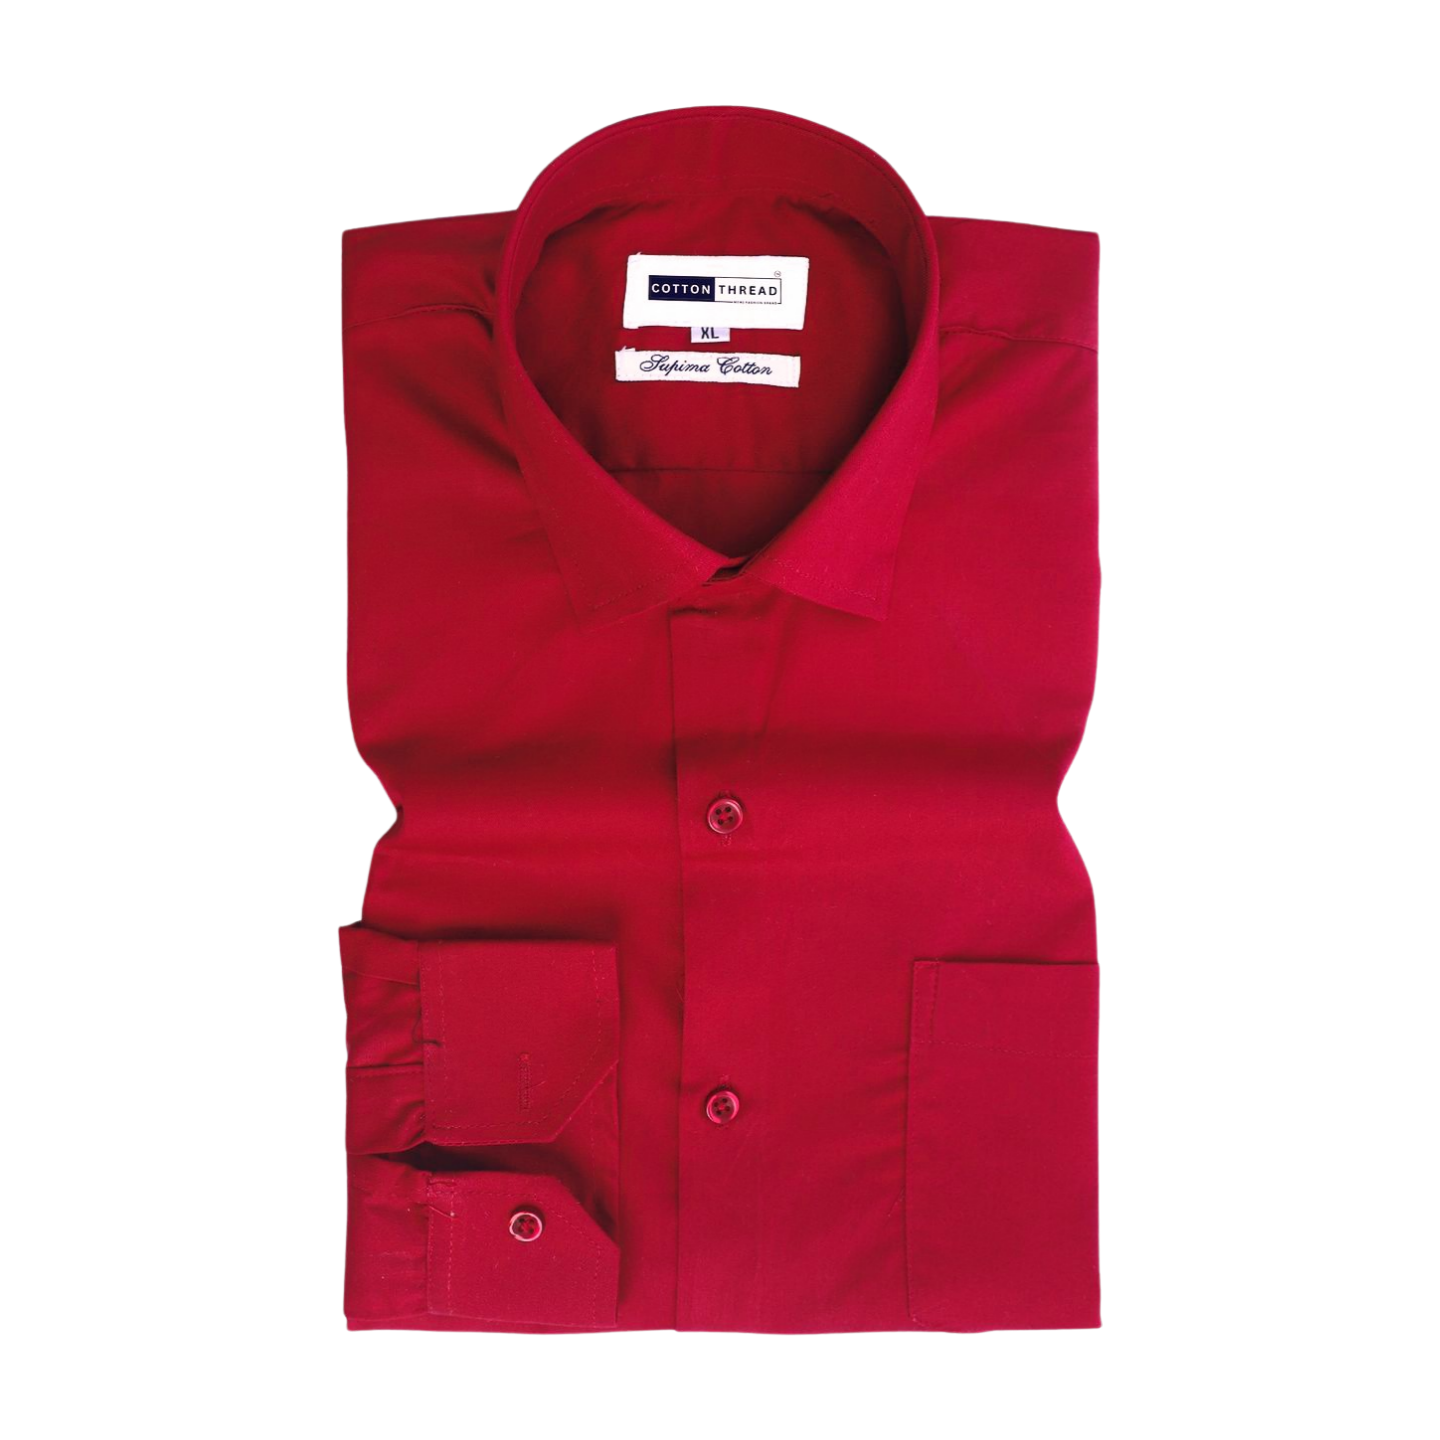 Men's Premium Formal Cotton Full Sleeve Maroon Solid Shirt By Cotton Thread (PLN-026)